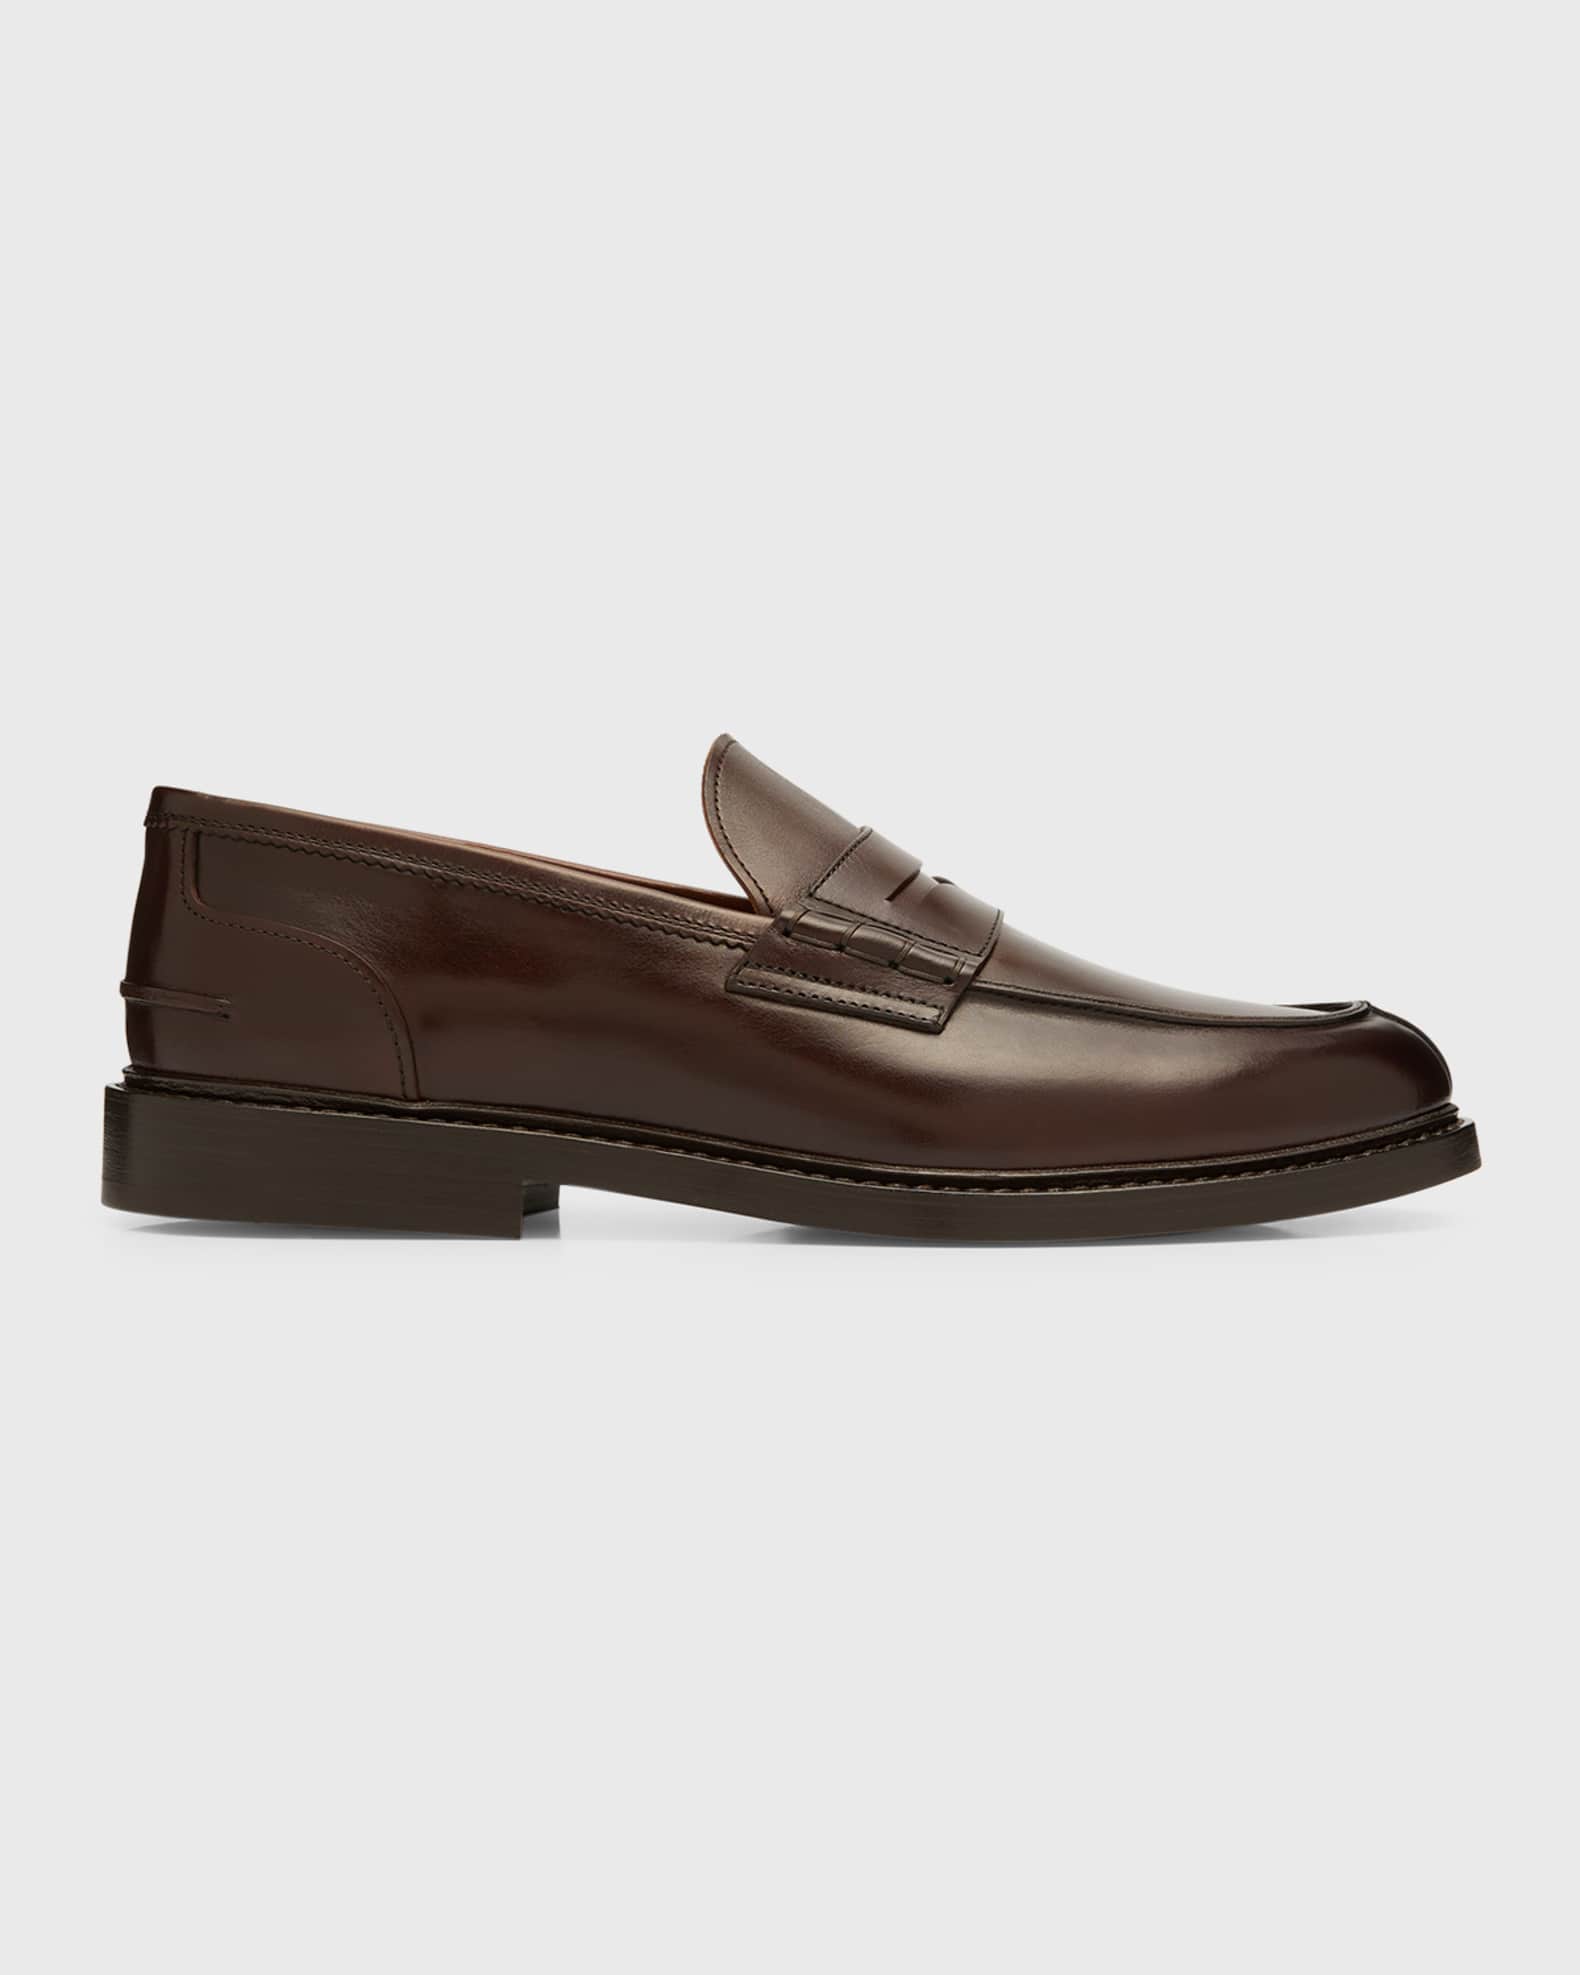 Brunello Cucinelli Men's Leather Penny Loafers | Neiman Marcus